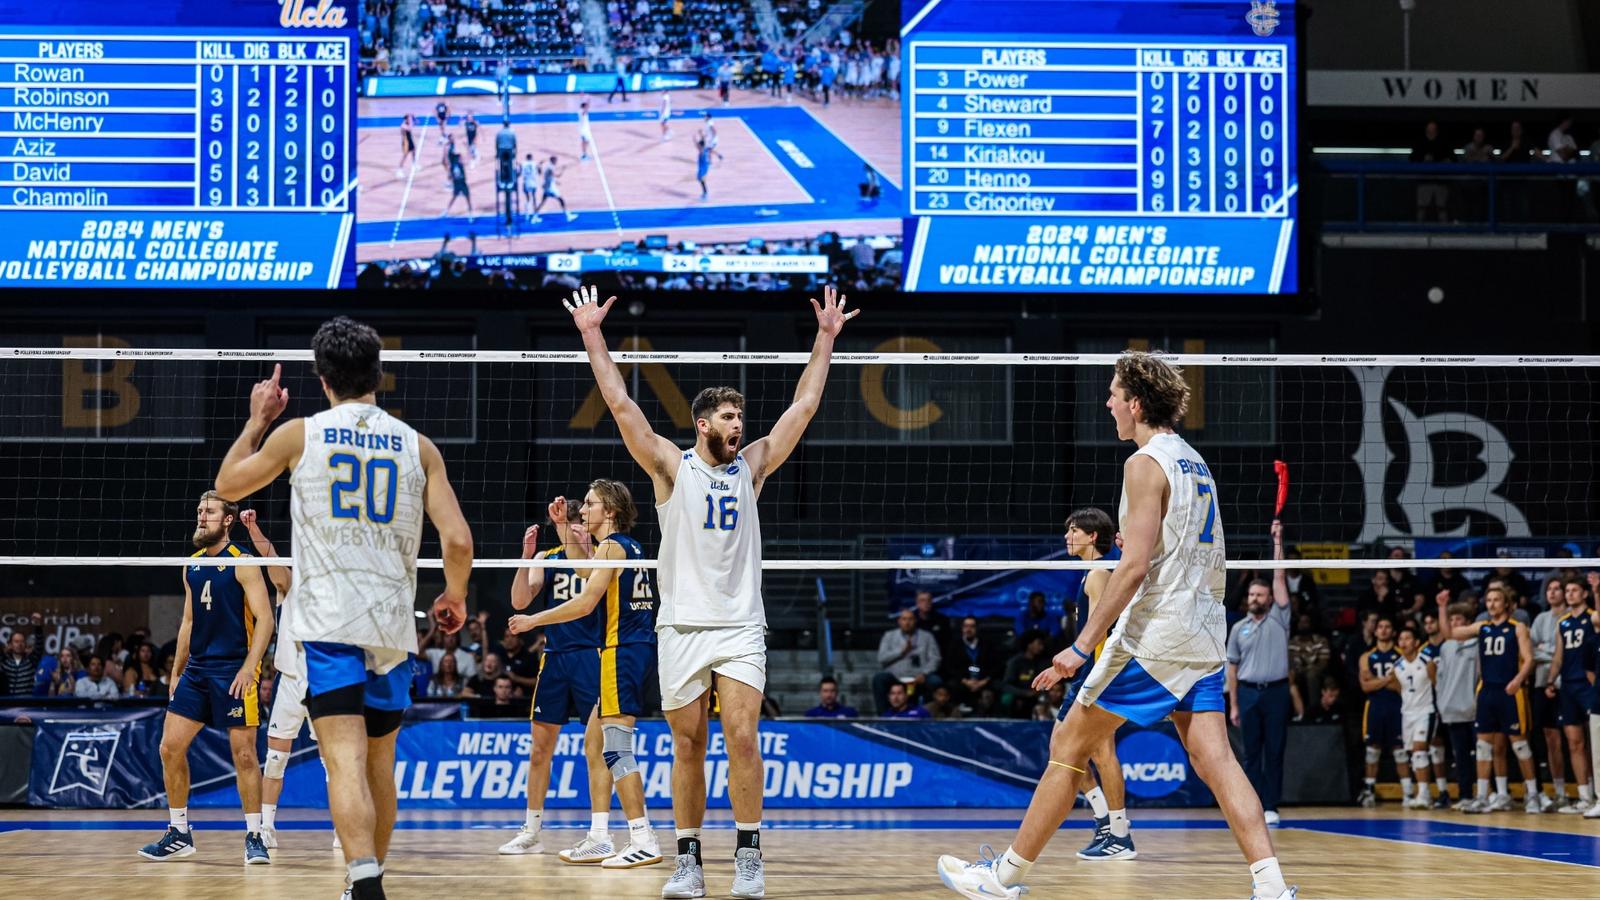 UCLA Men’s Volleyball Defeats UC Irvine to Reach NCAA Championship Title Match